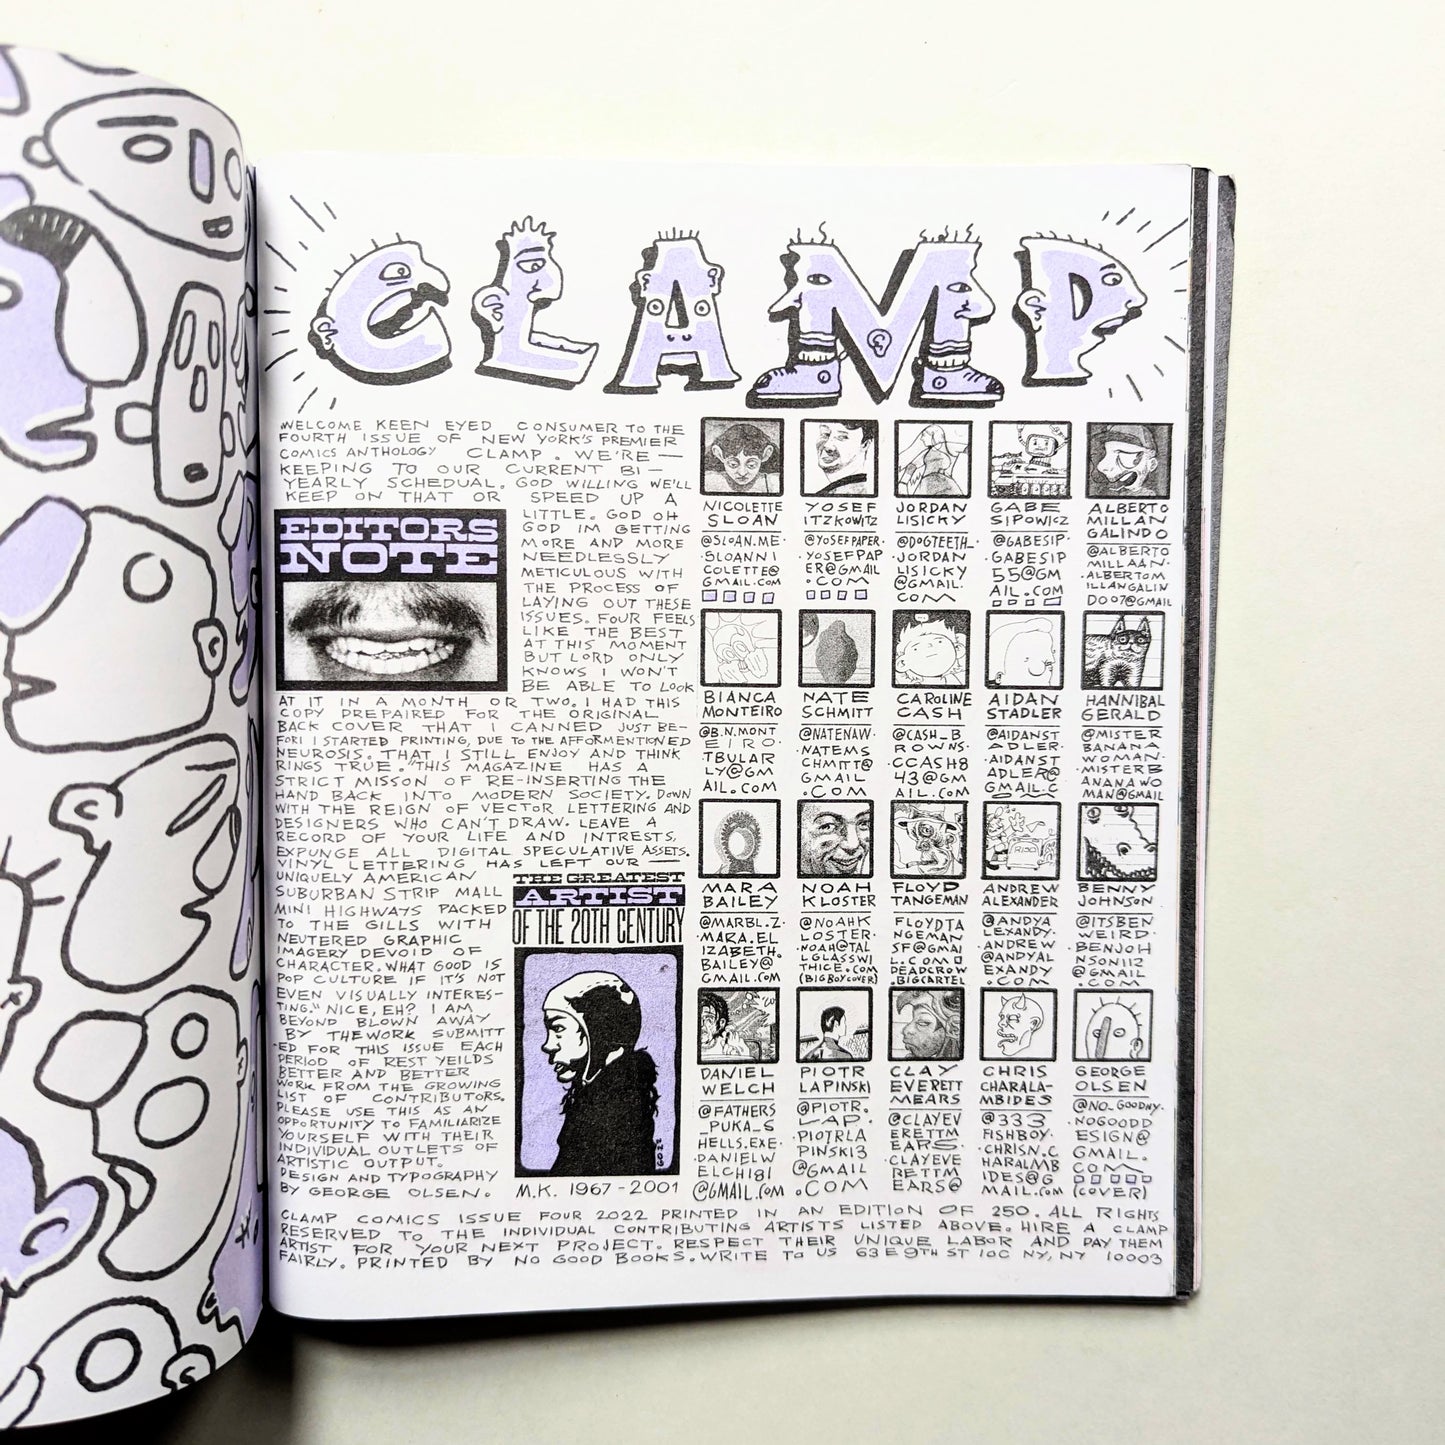 Clamp No. 4 (ed. George Olsen)